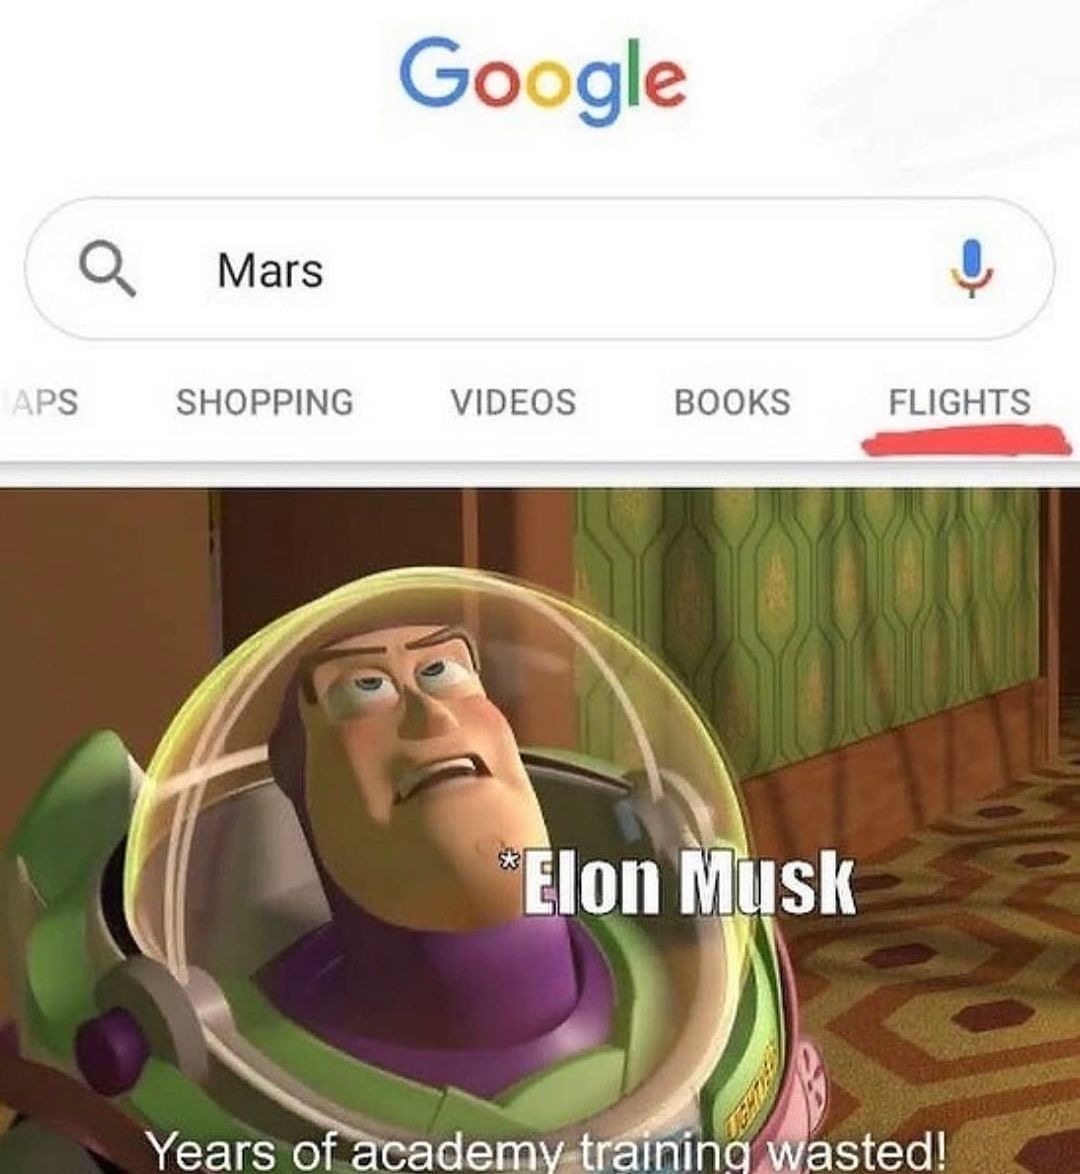 It looks like Elon musk's dream has been already achieved 😂